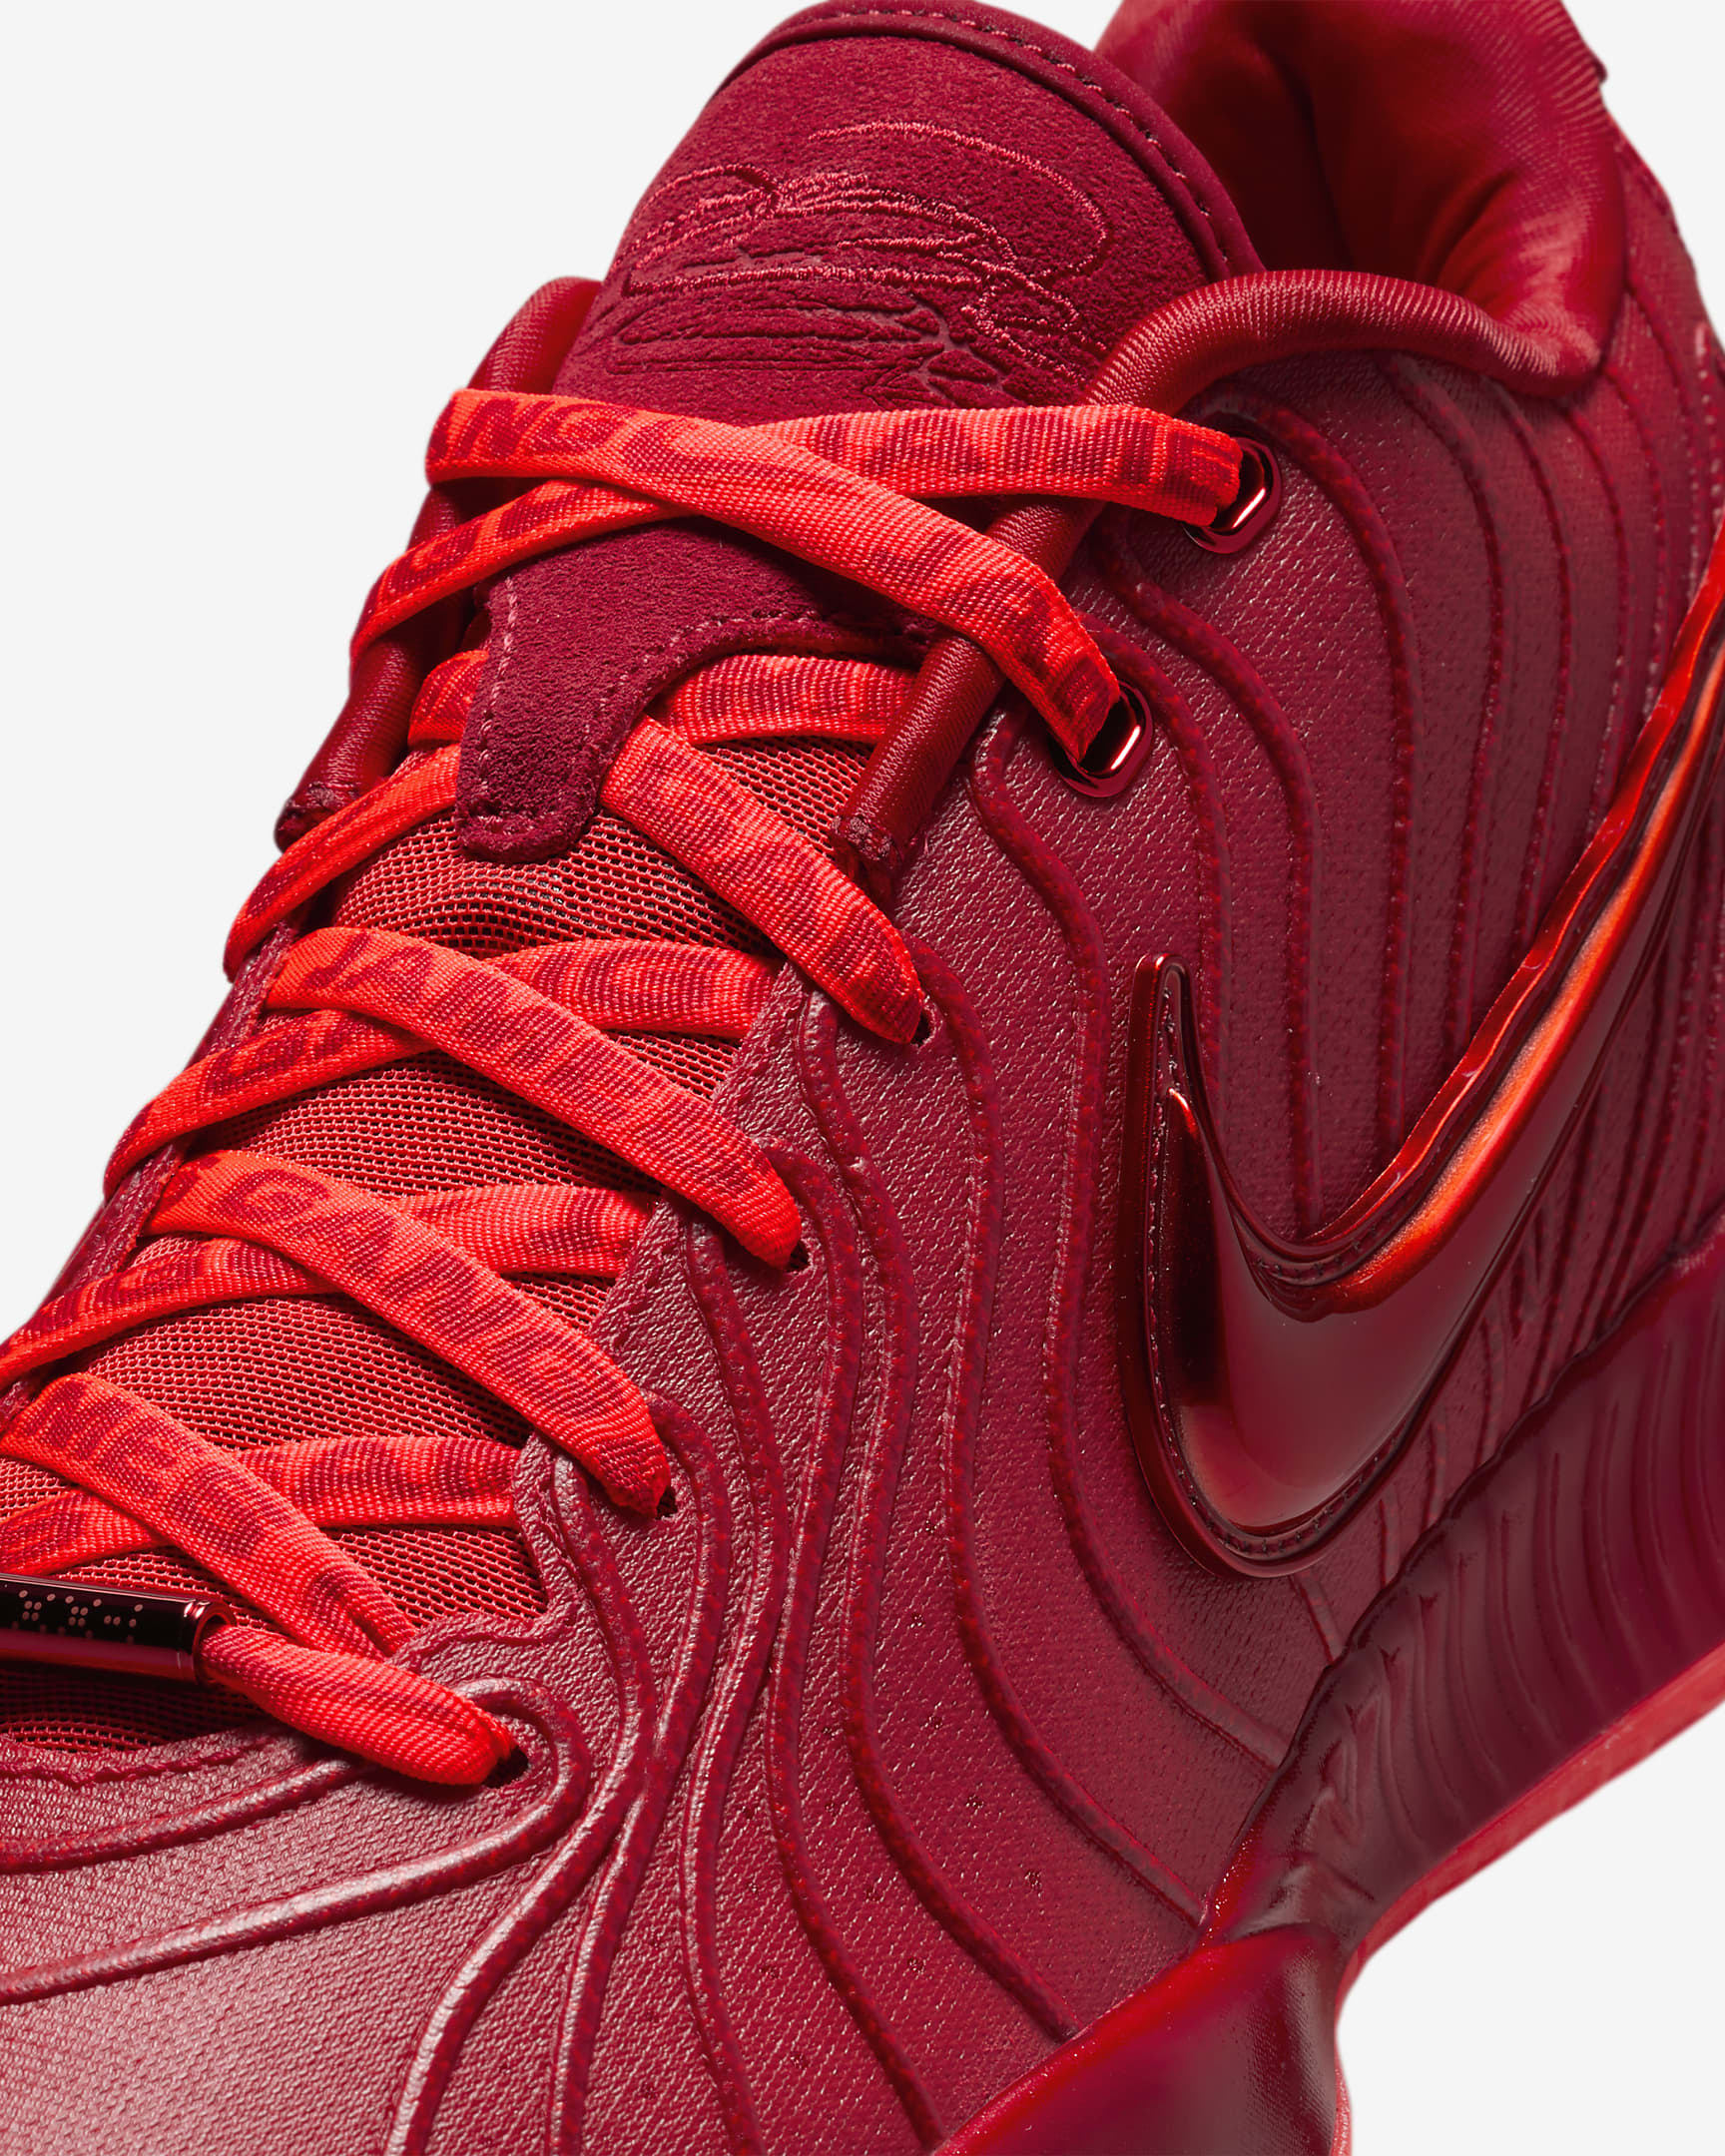 LeBron XXI Basketball Shoes - Bright Crimson/Gym Red